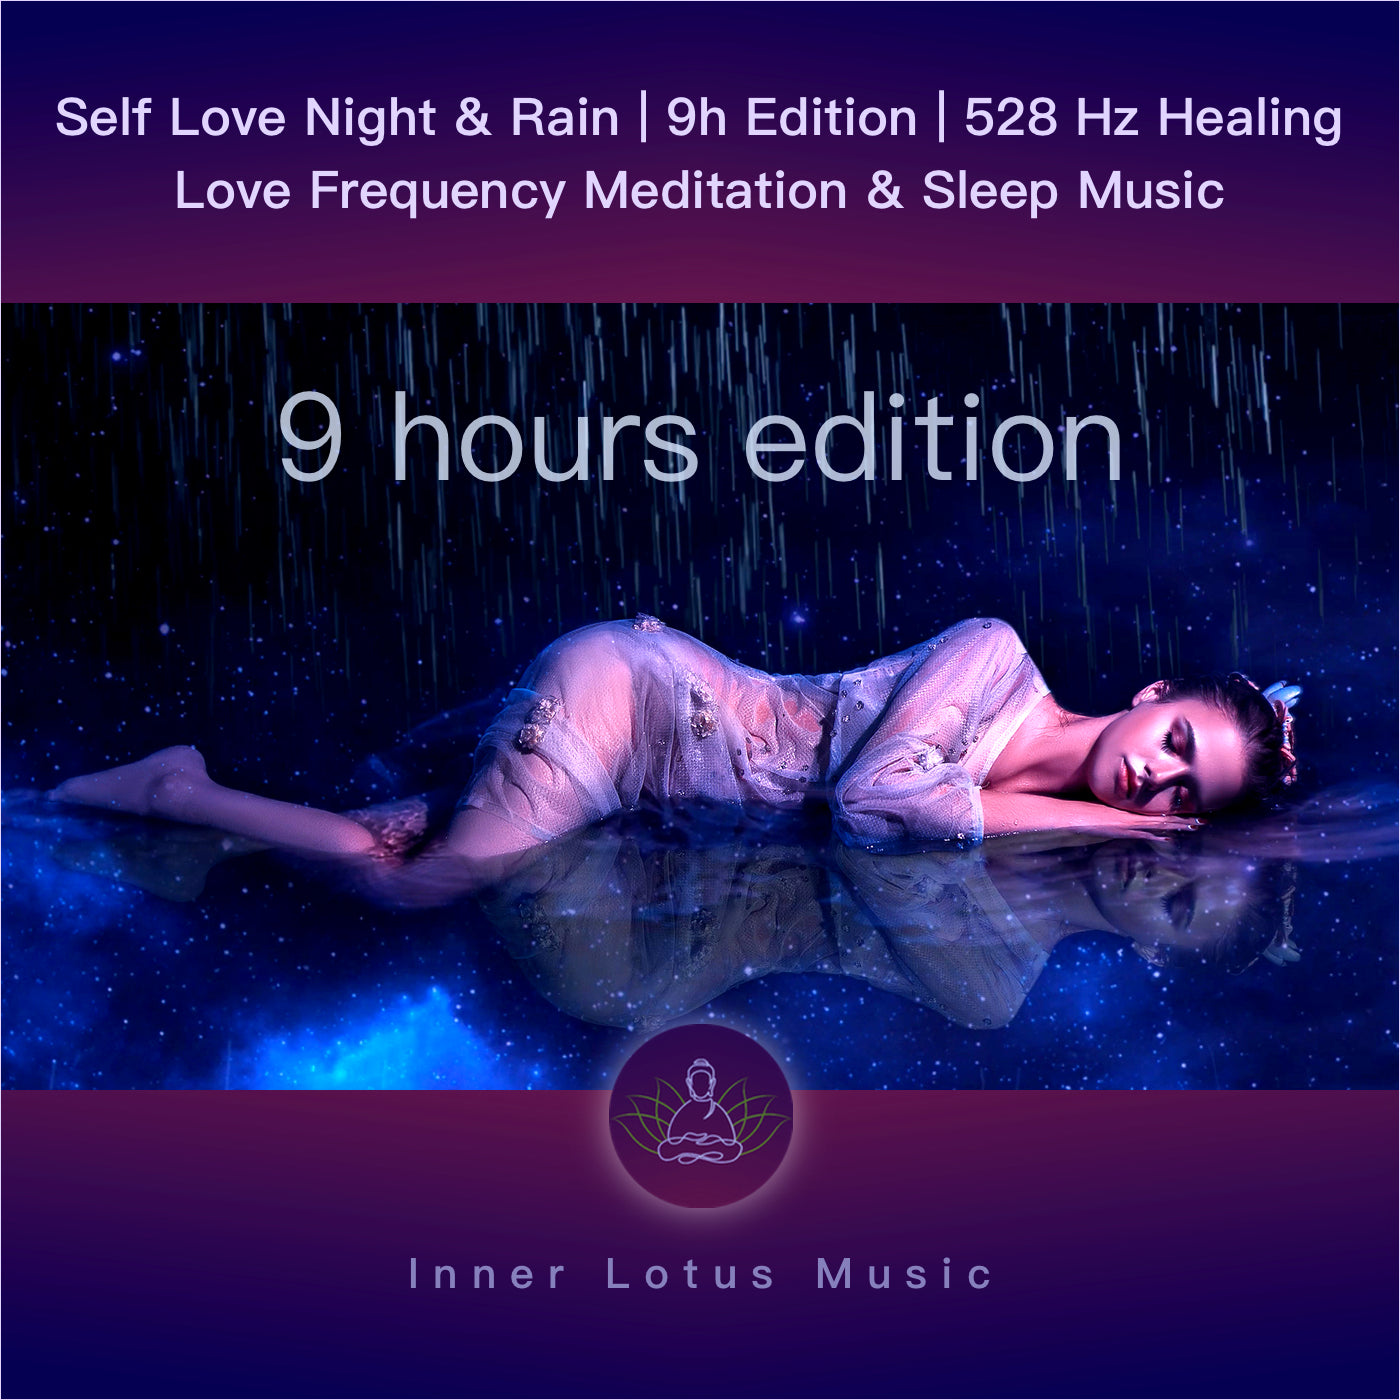 Self Love Night & Rain | 9h Edition | 528 Hz Healing Love Frequency Meditation & Sleep Music